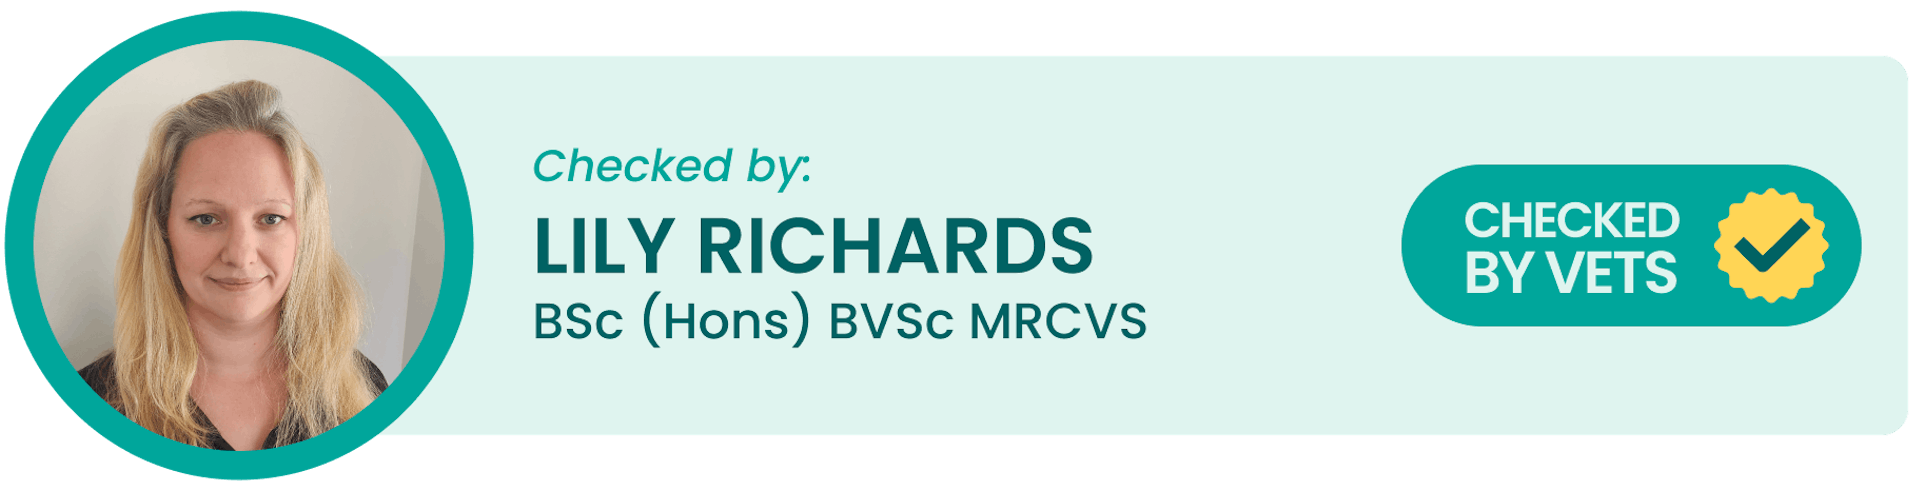 Checked by: Lily Richards BSc (Hons) BVSc MRCVS